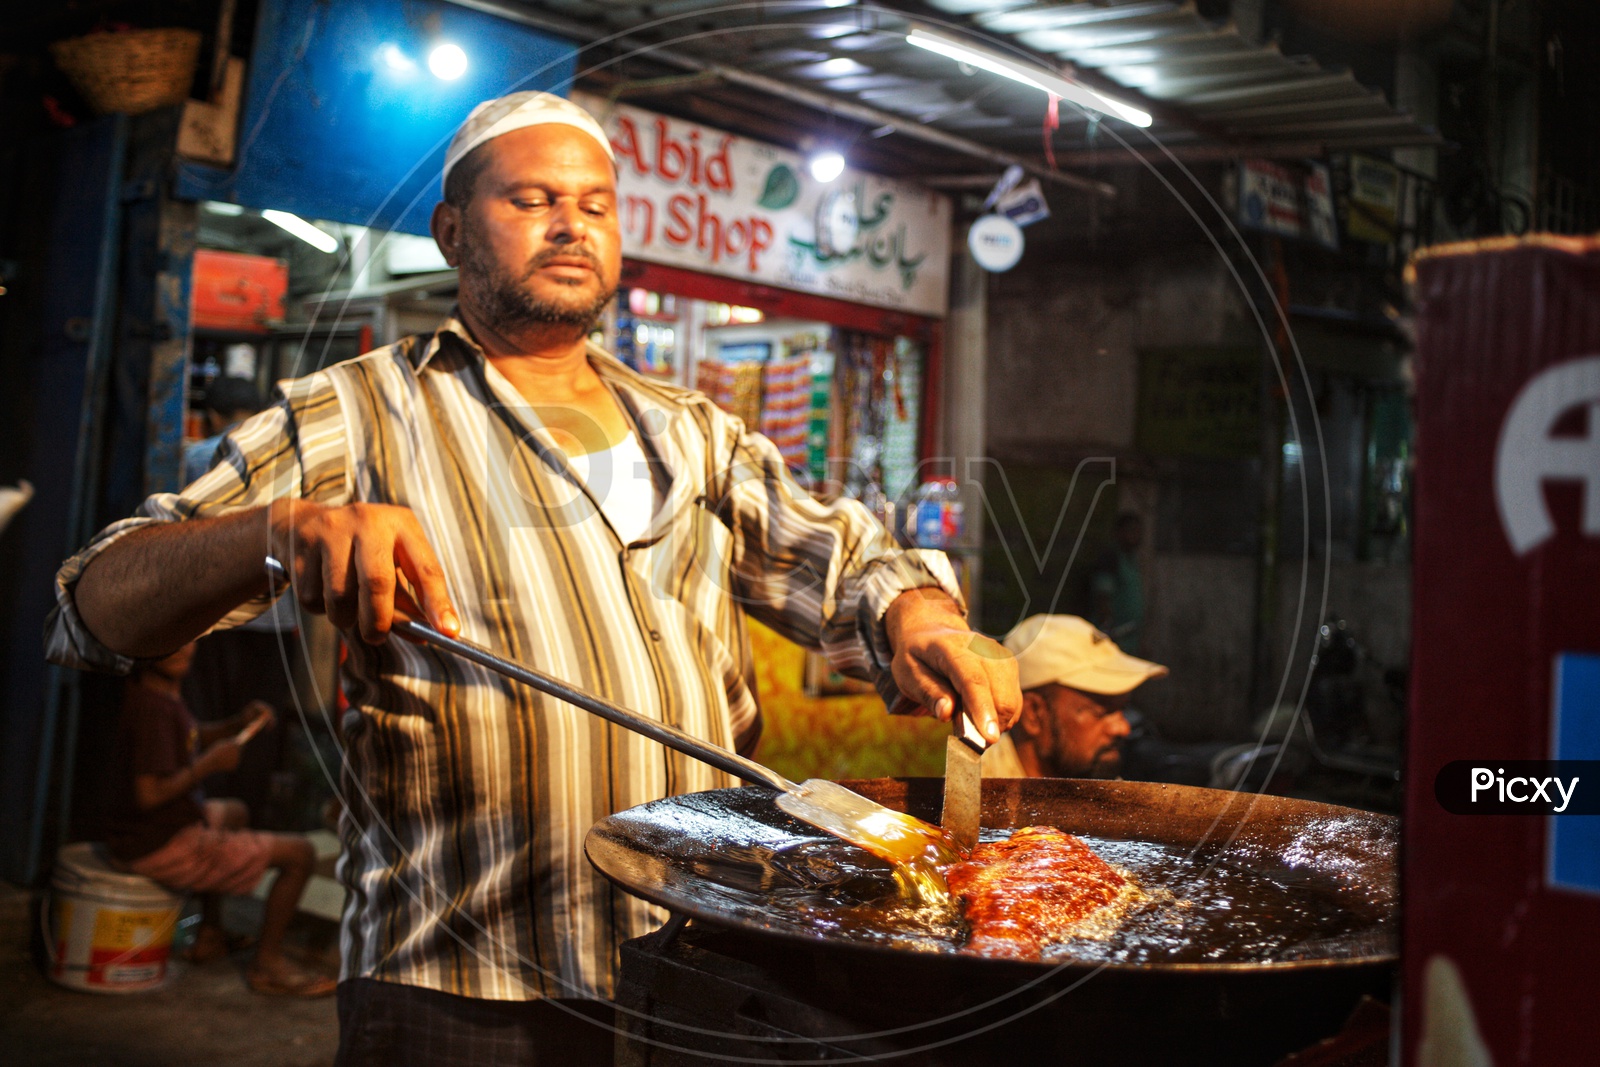 A Street Food Vendor Making Fish Fry At a Stall